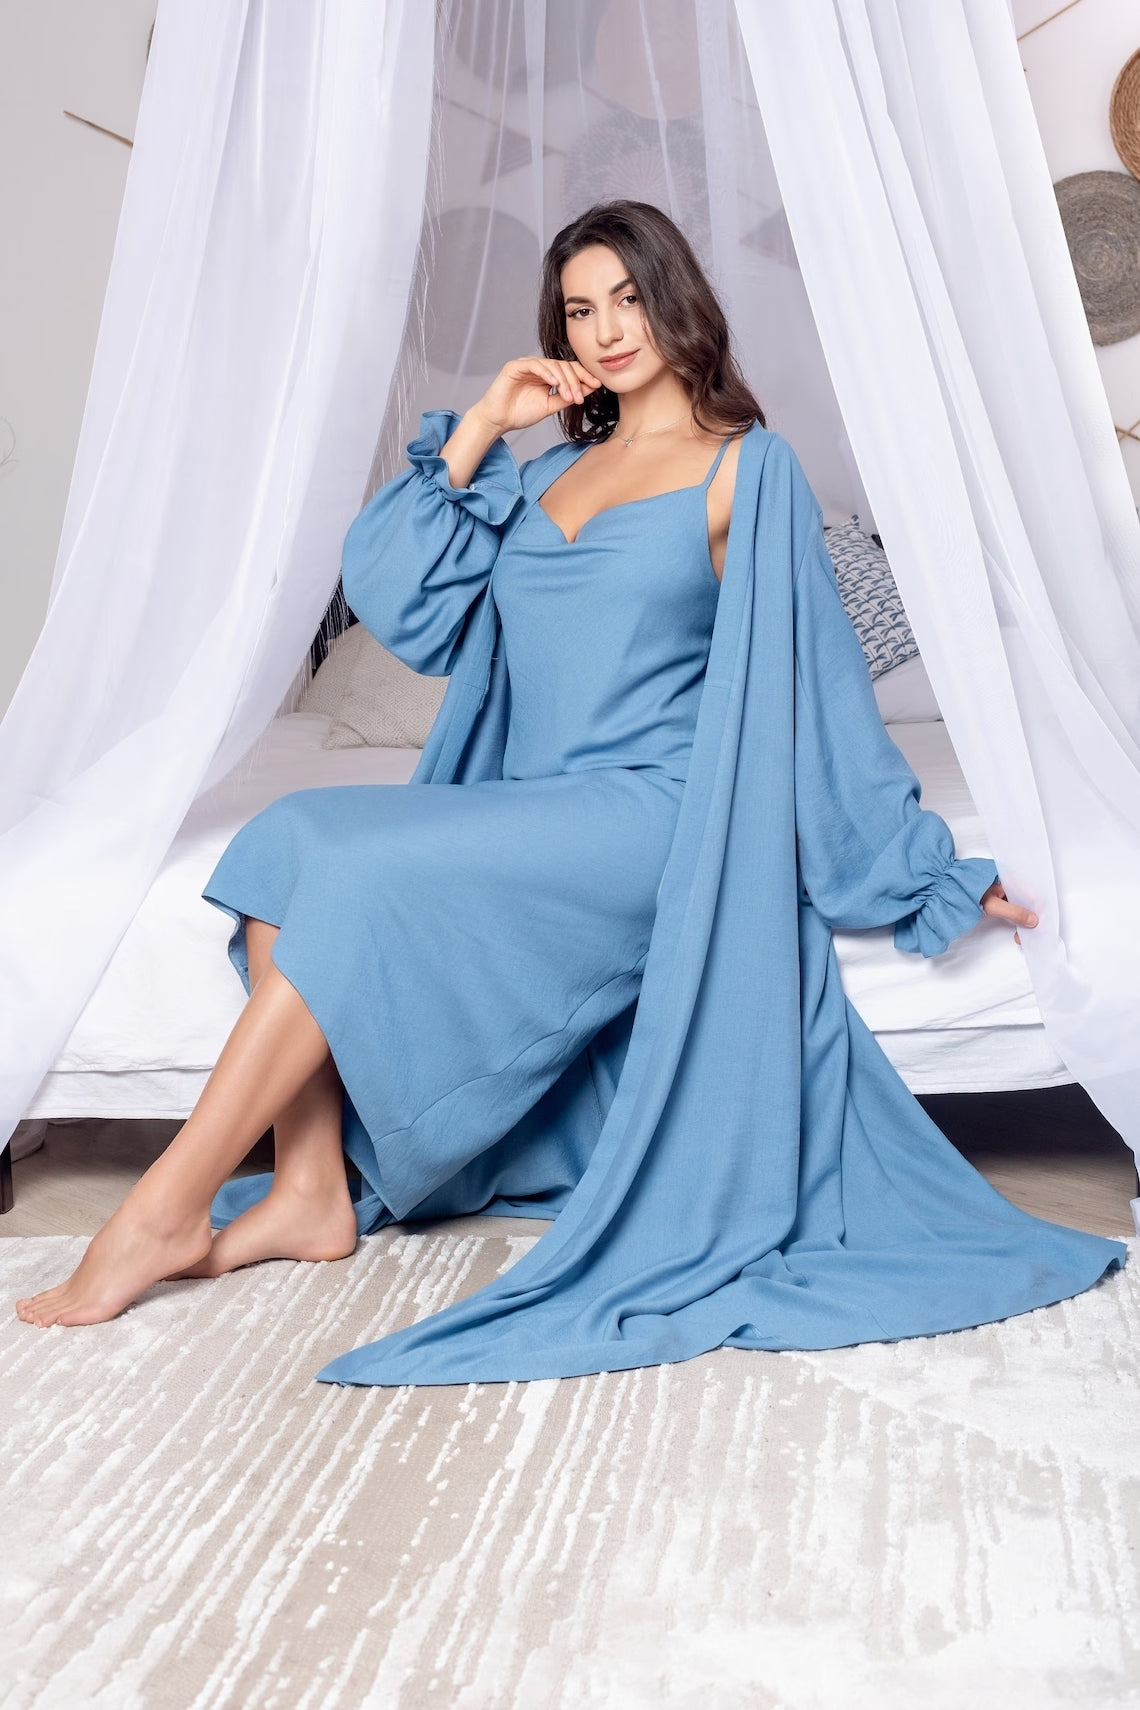 Seductive Blue Loungewear Nightgown and Robe Set